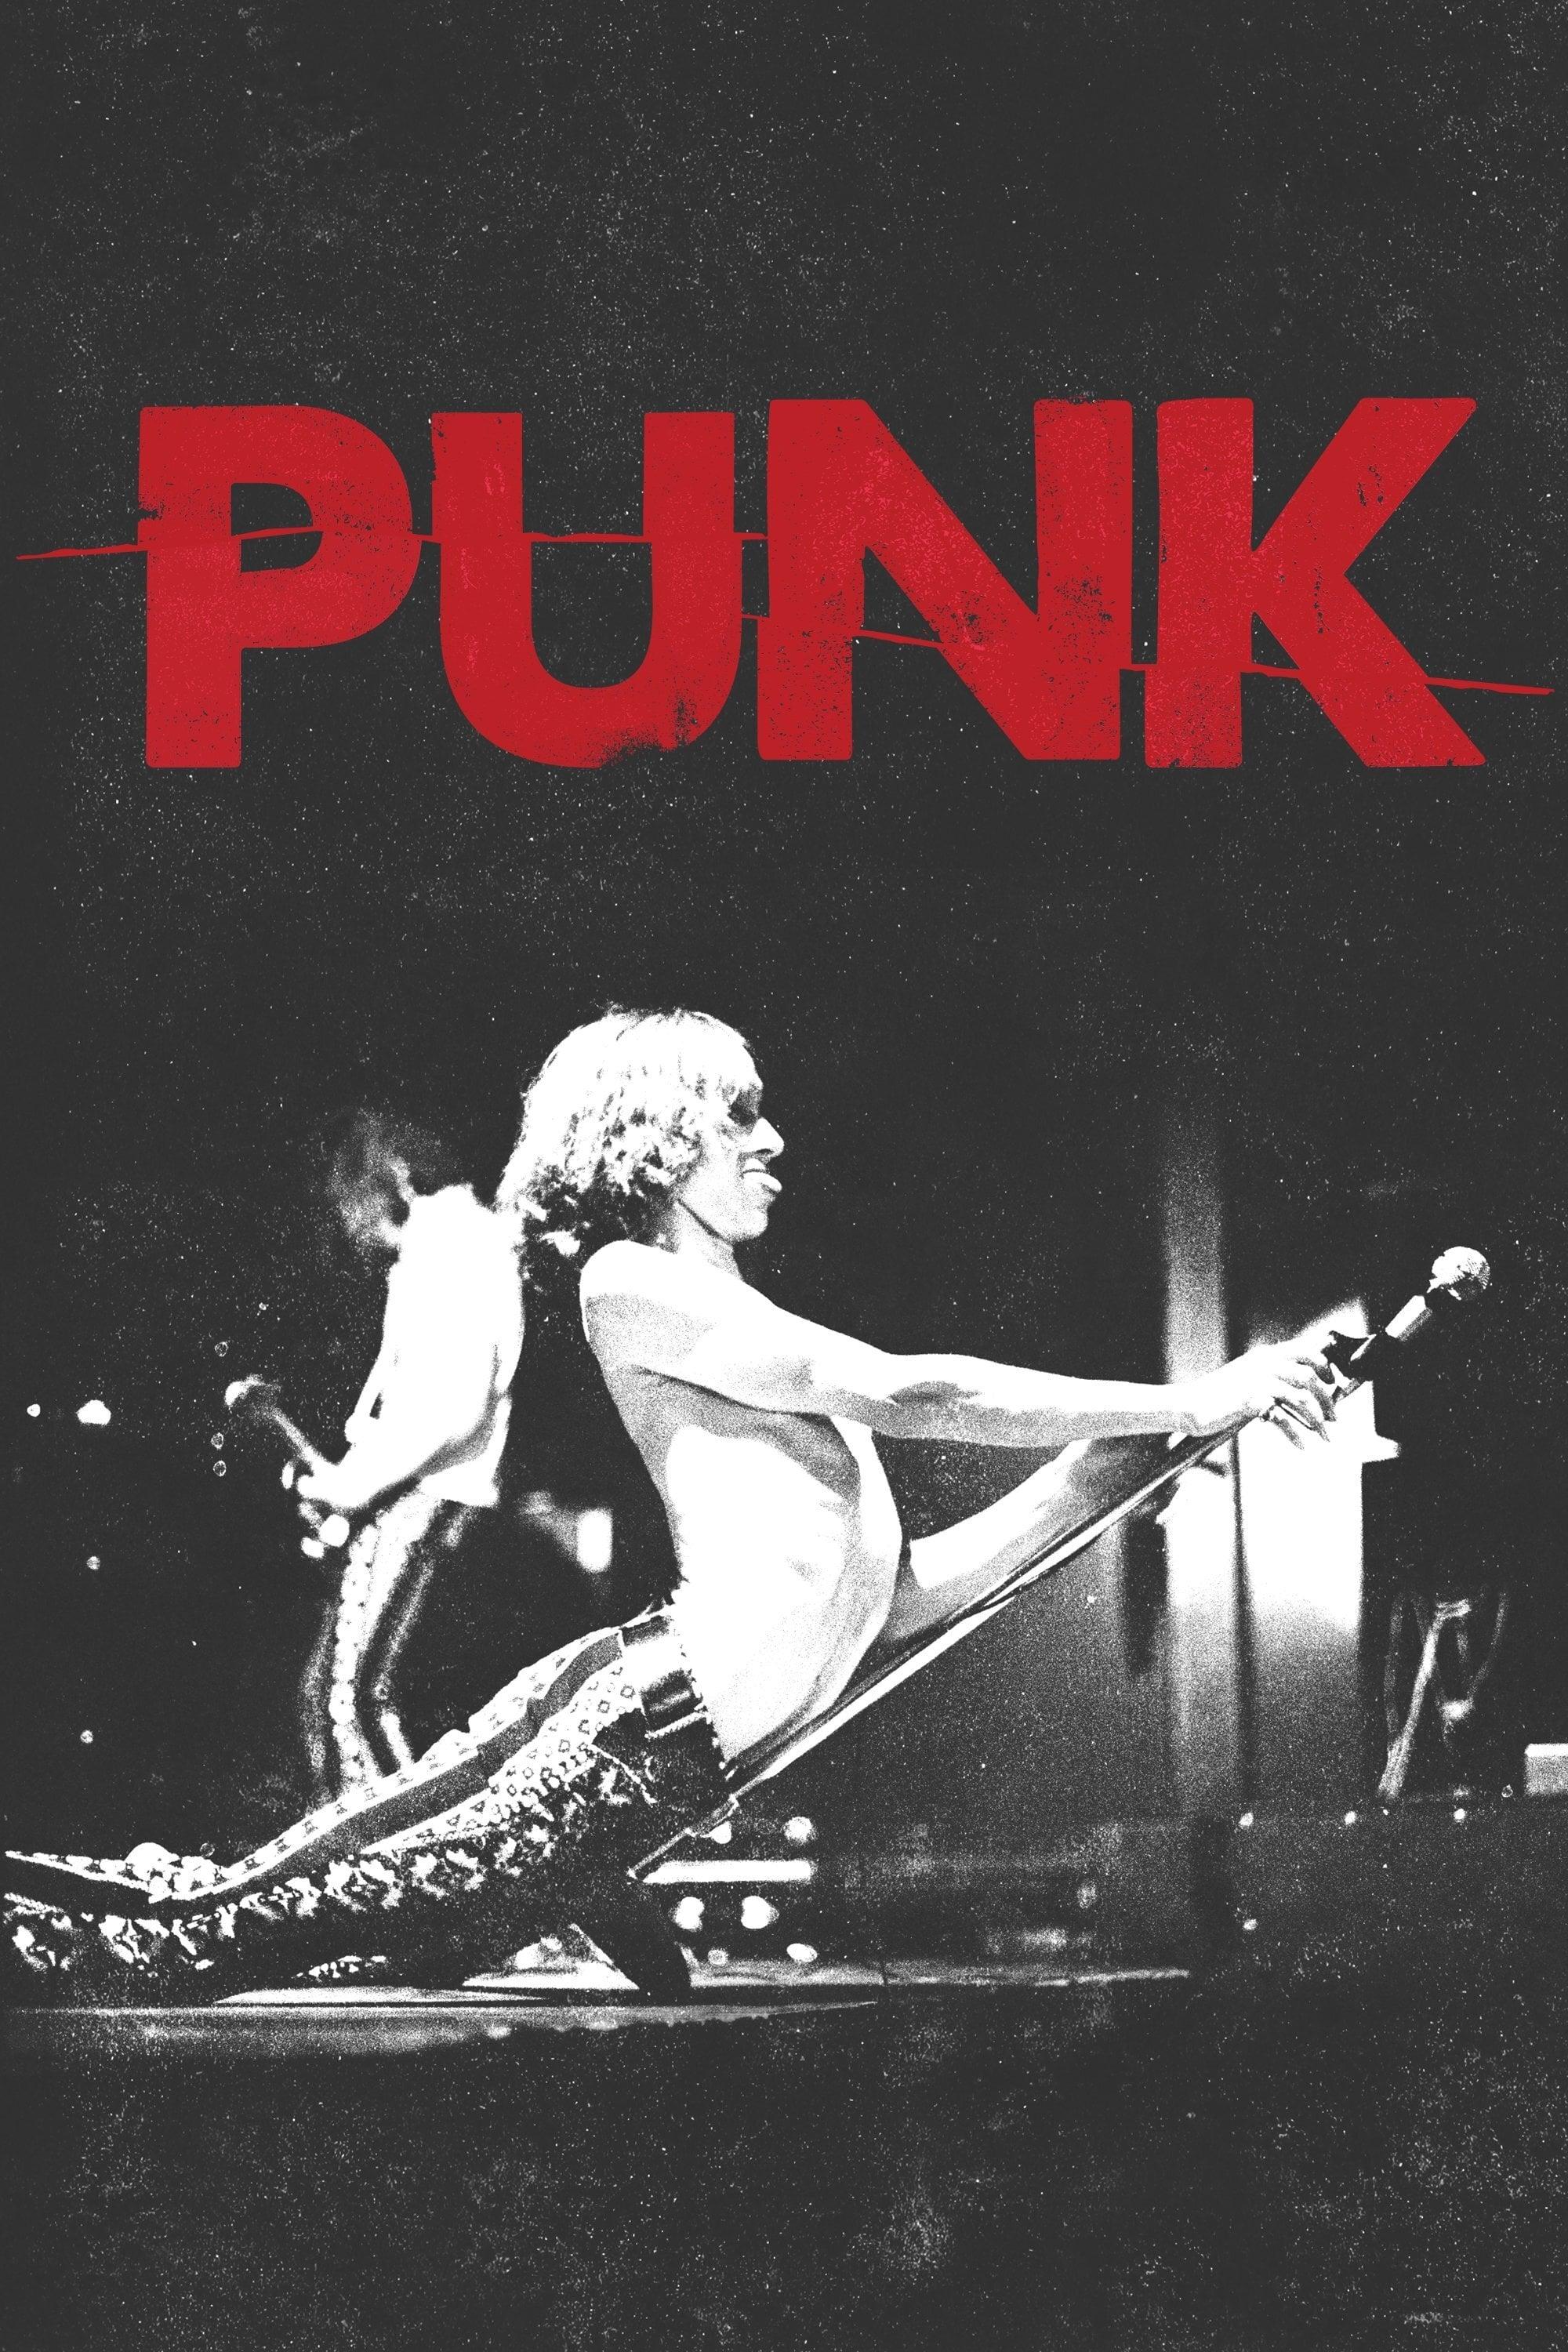 Punk poster